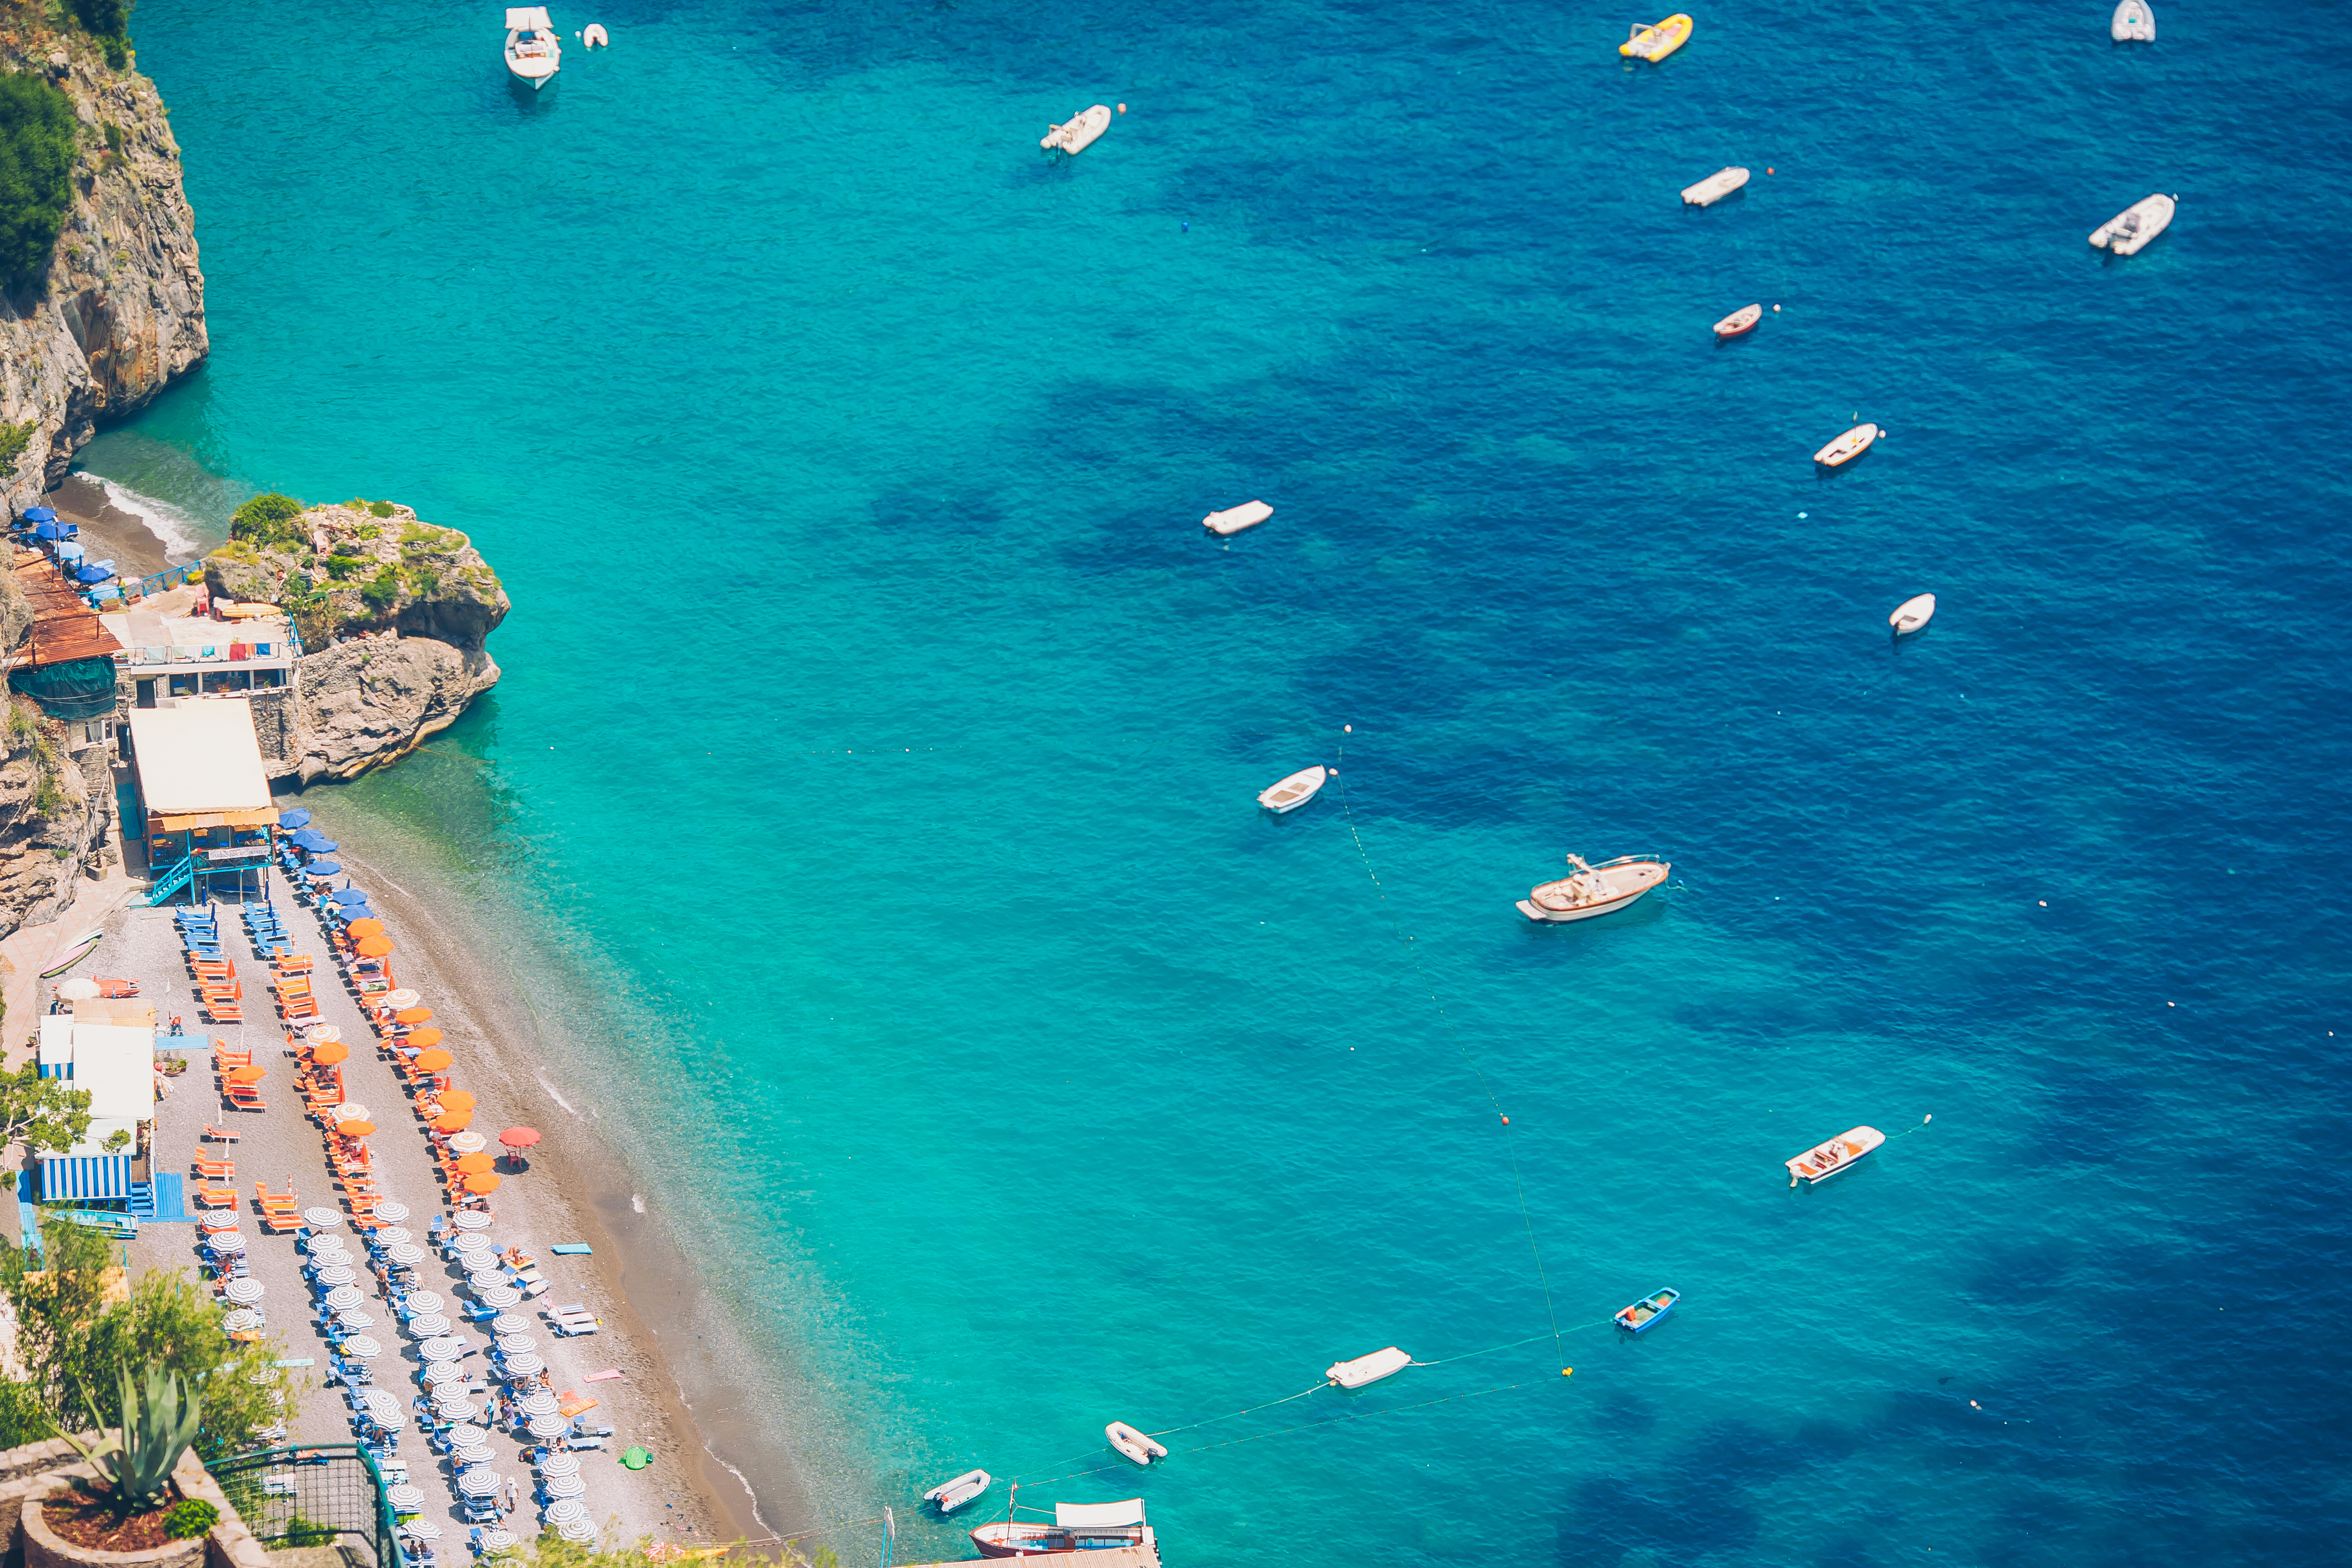 Amalfi Collection: The charm of Italy coastline